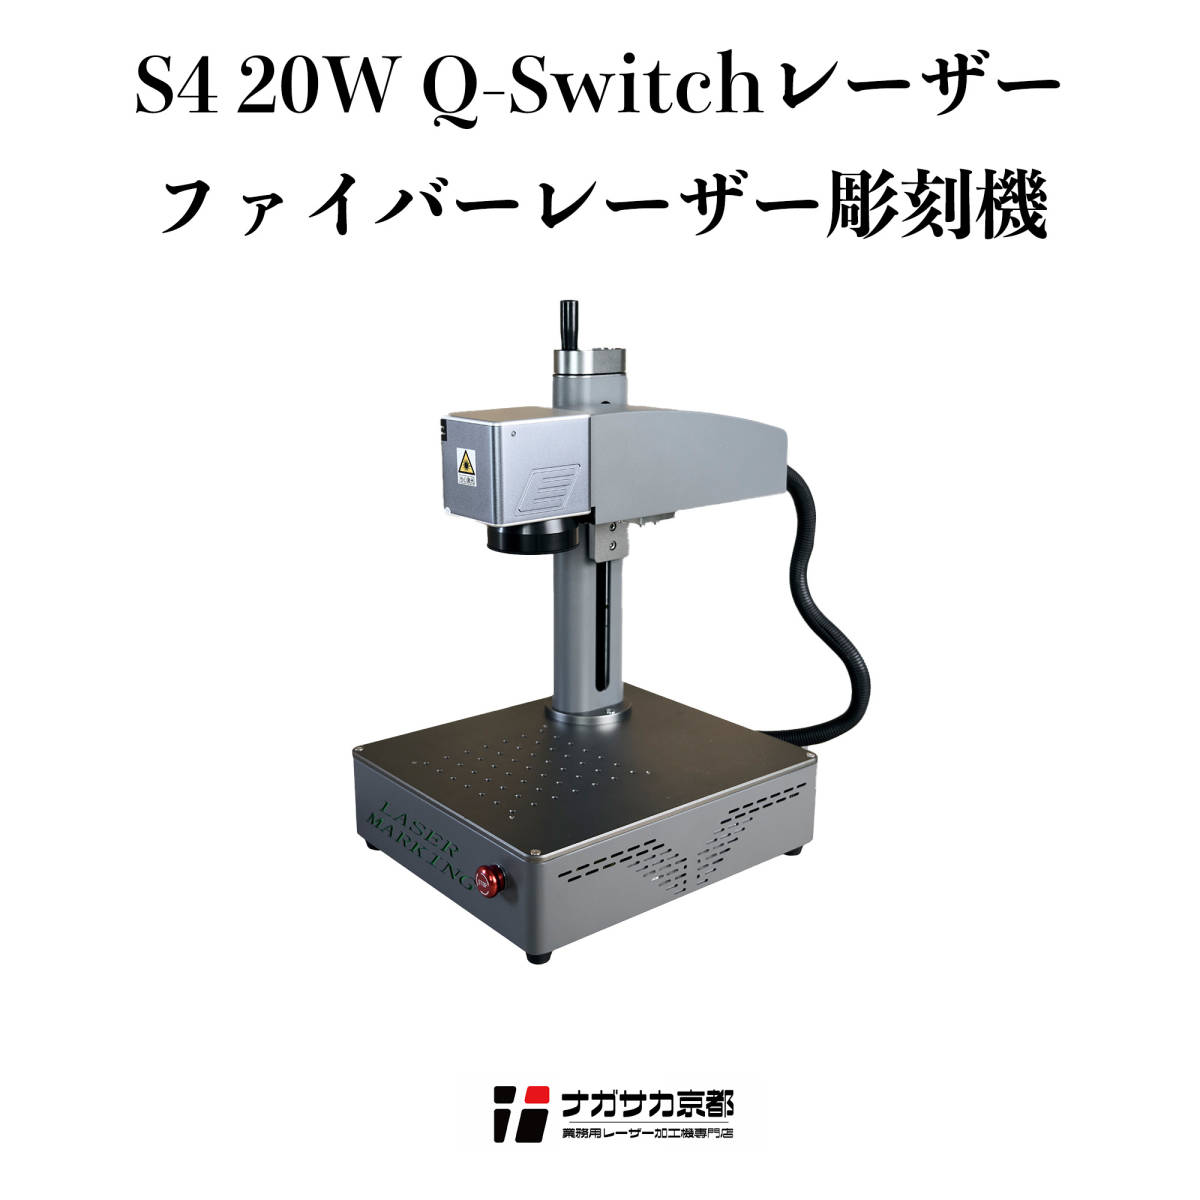 【S4】20W ファイバーレーザー彫刻機 Q-Switchレーザー 最大200*200mm 最大50W 14KG 軽量卓上式 真鍮 深彫り 名入れ